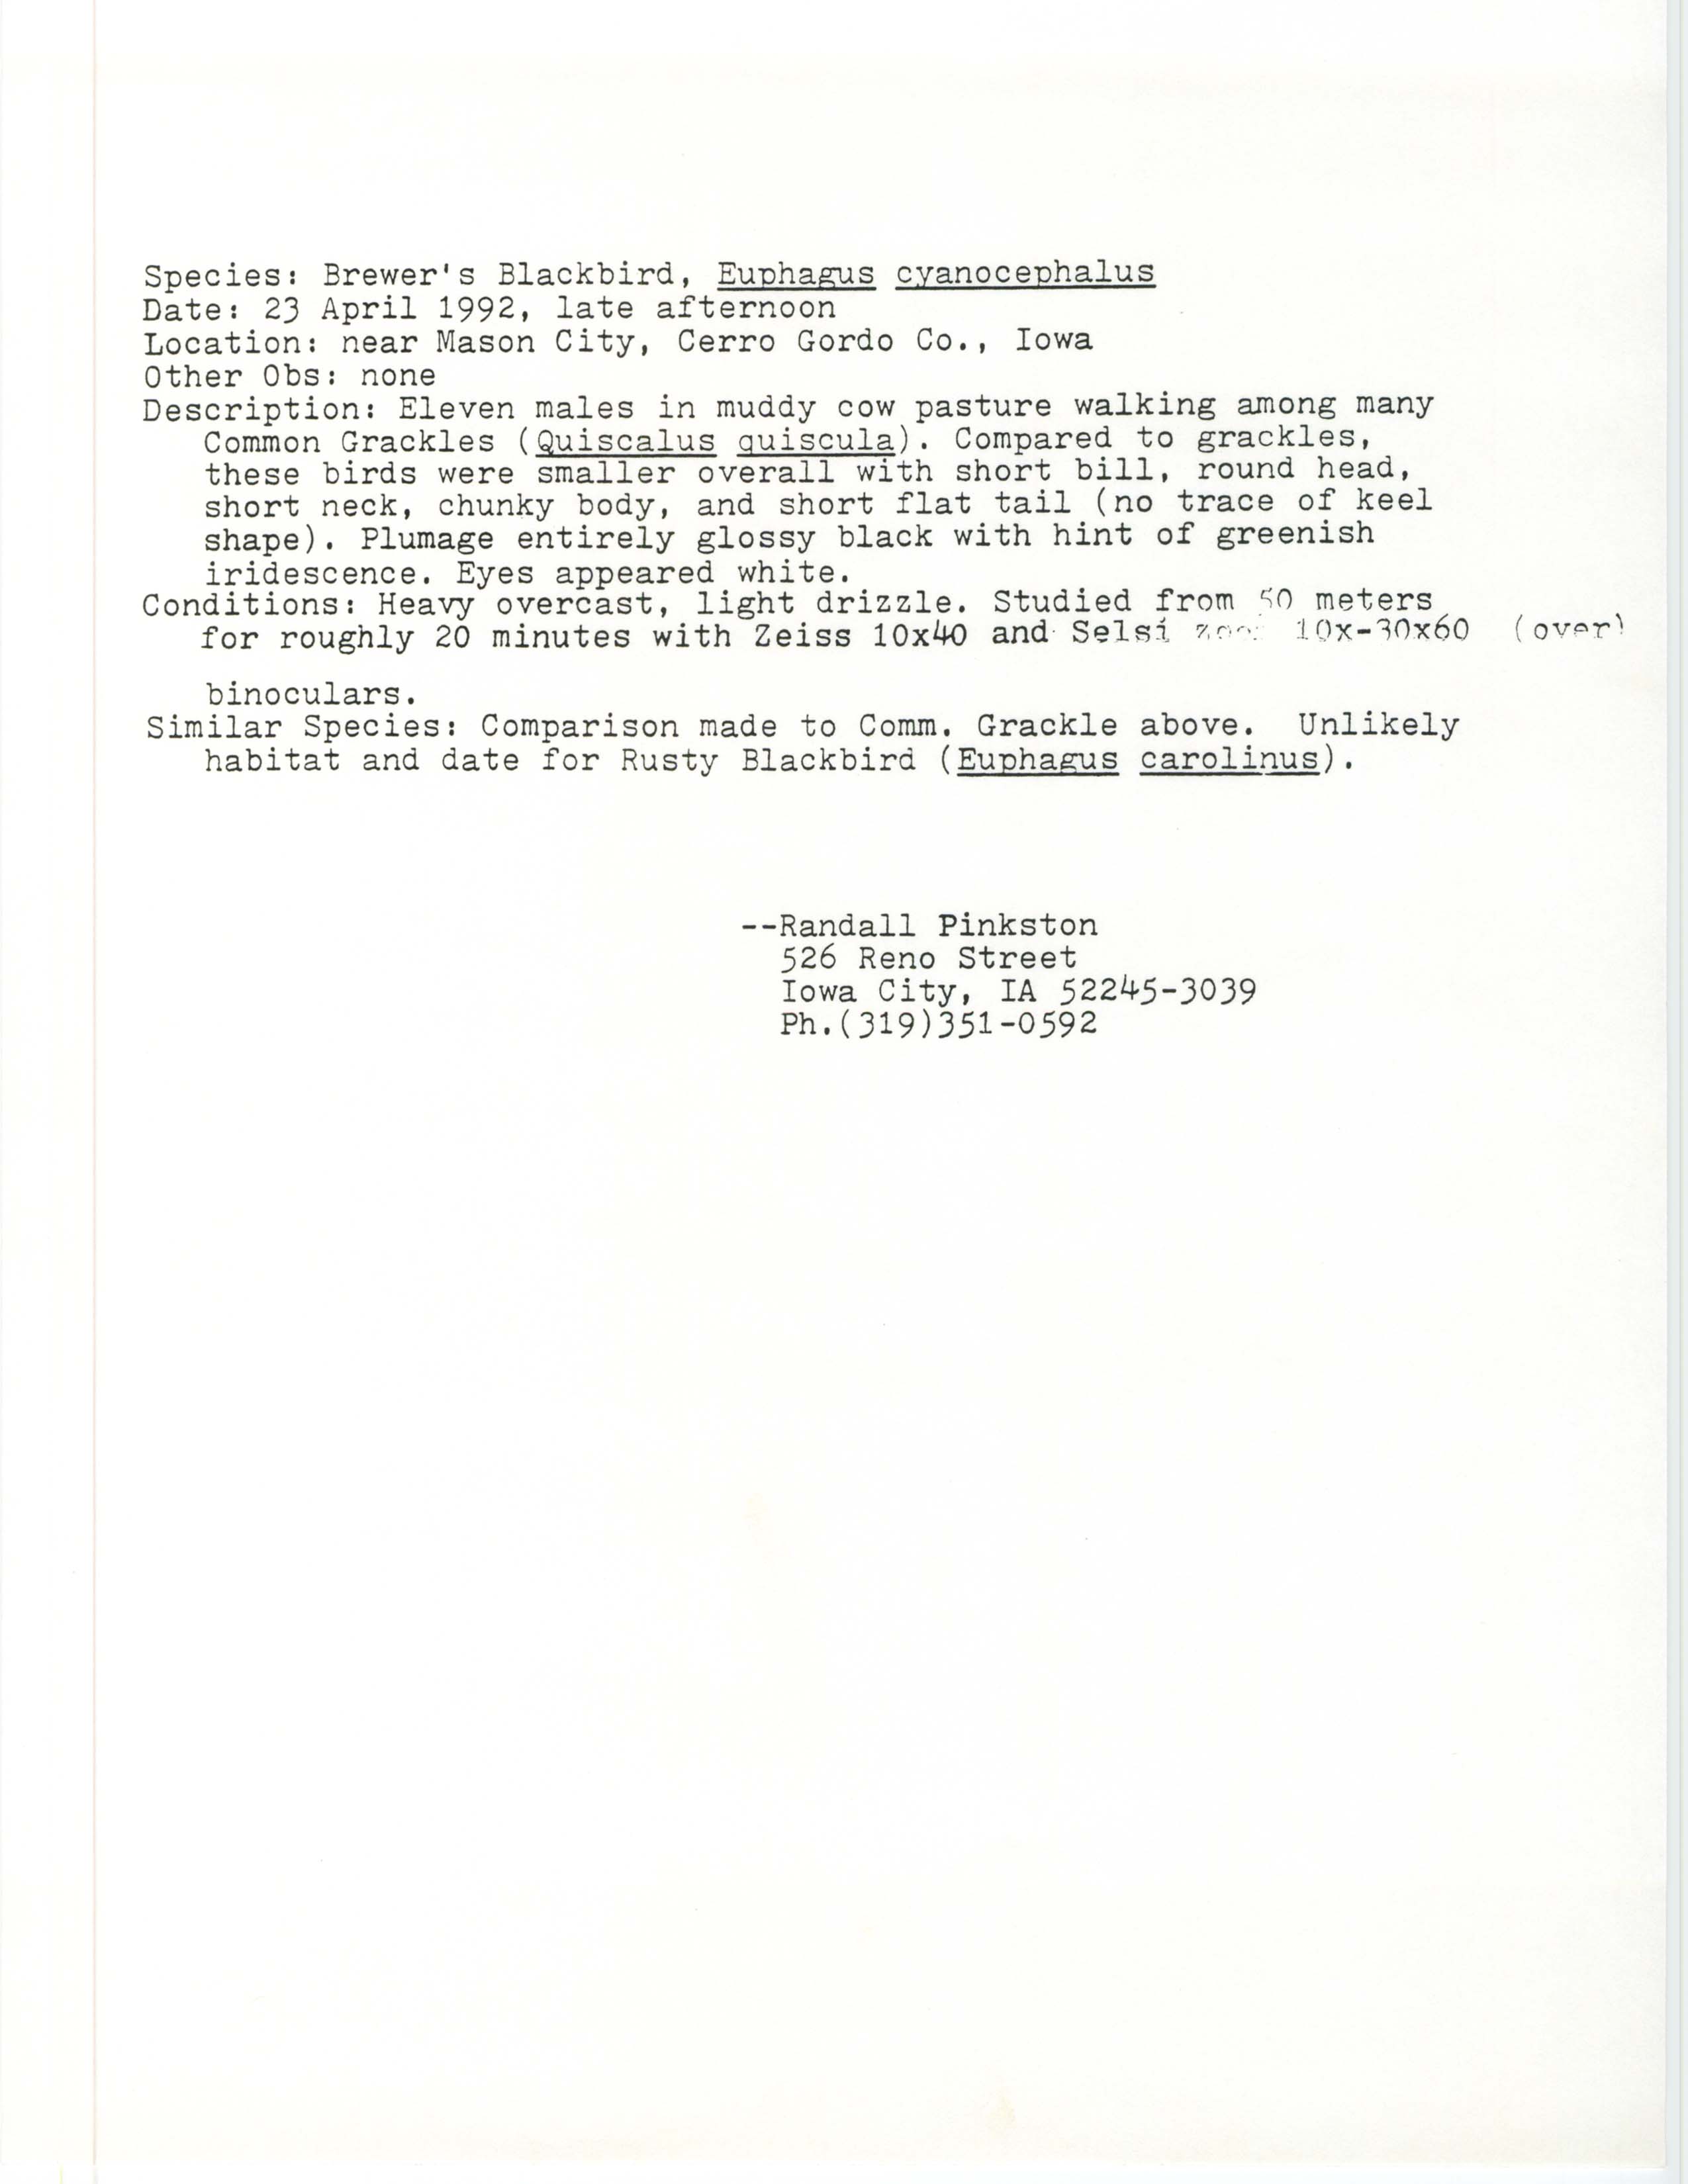 Rare bird documentation form for Brewer's Blackbird near Mason City, 1992